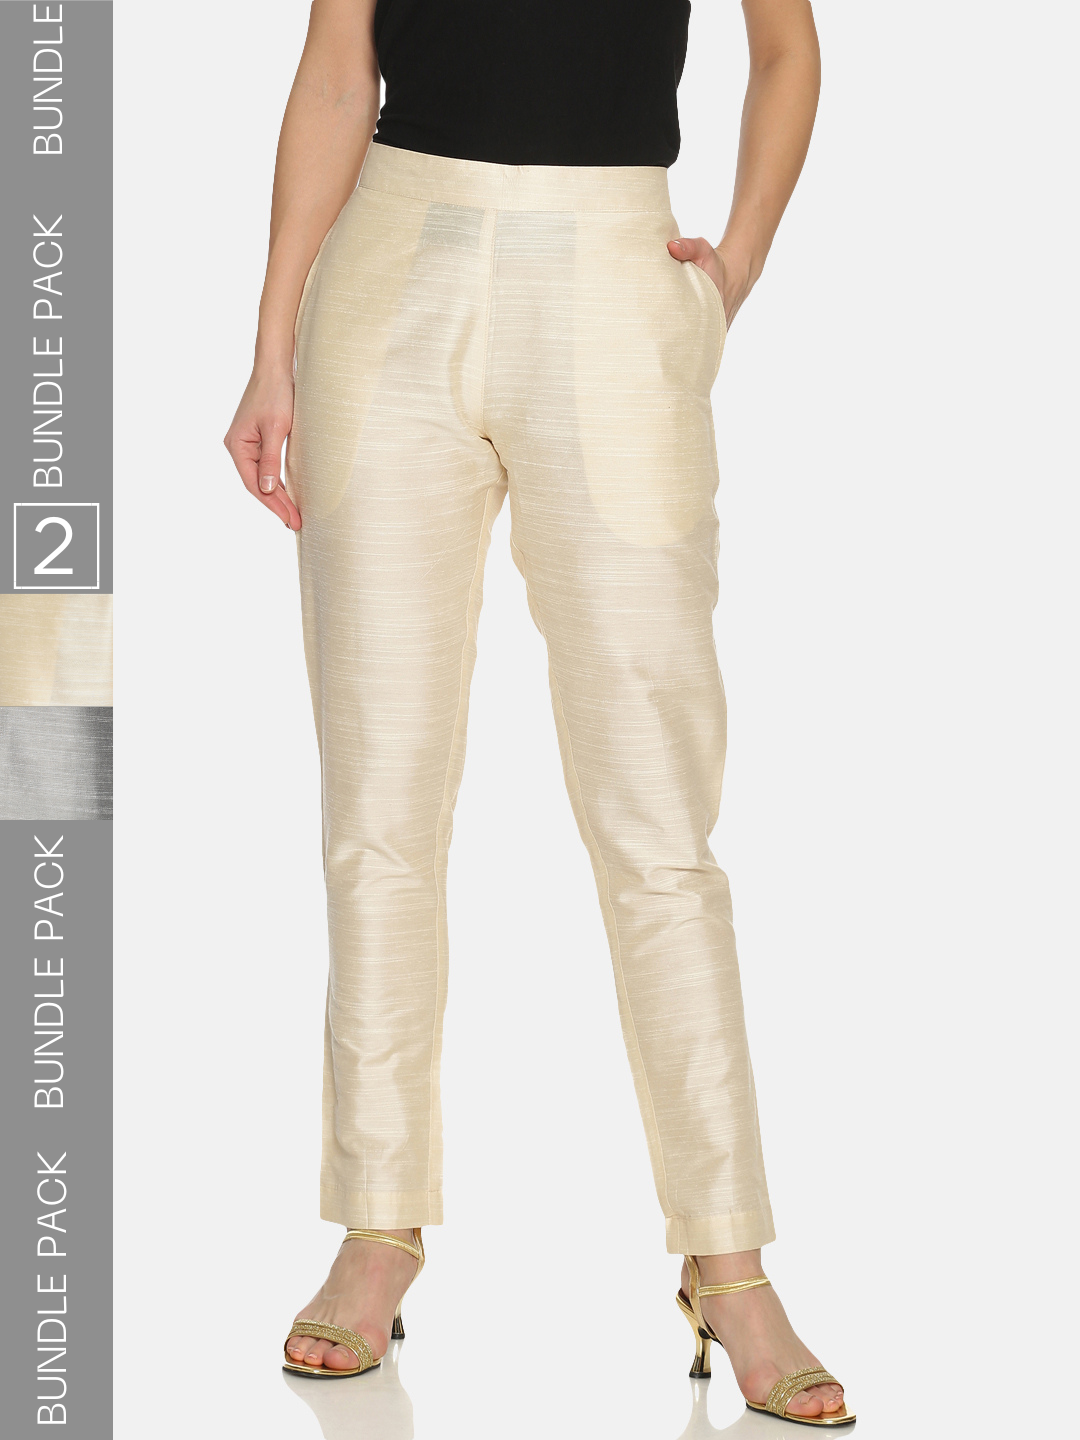 White silk trousers